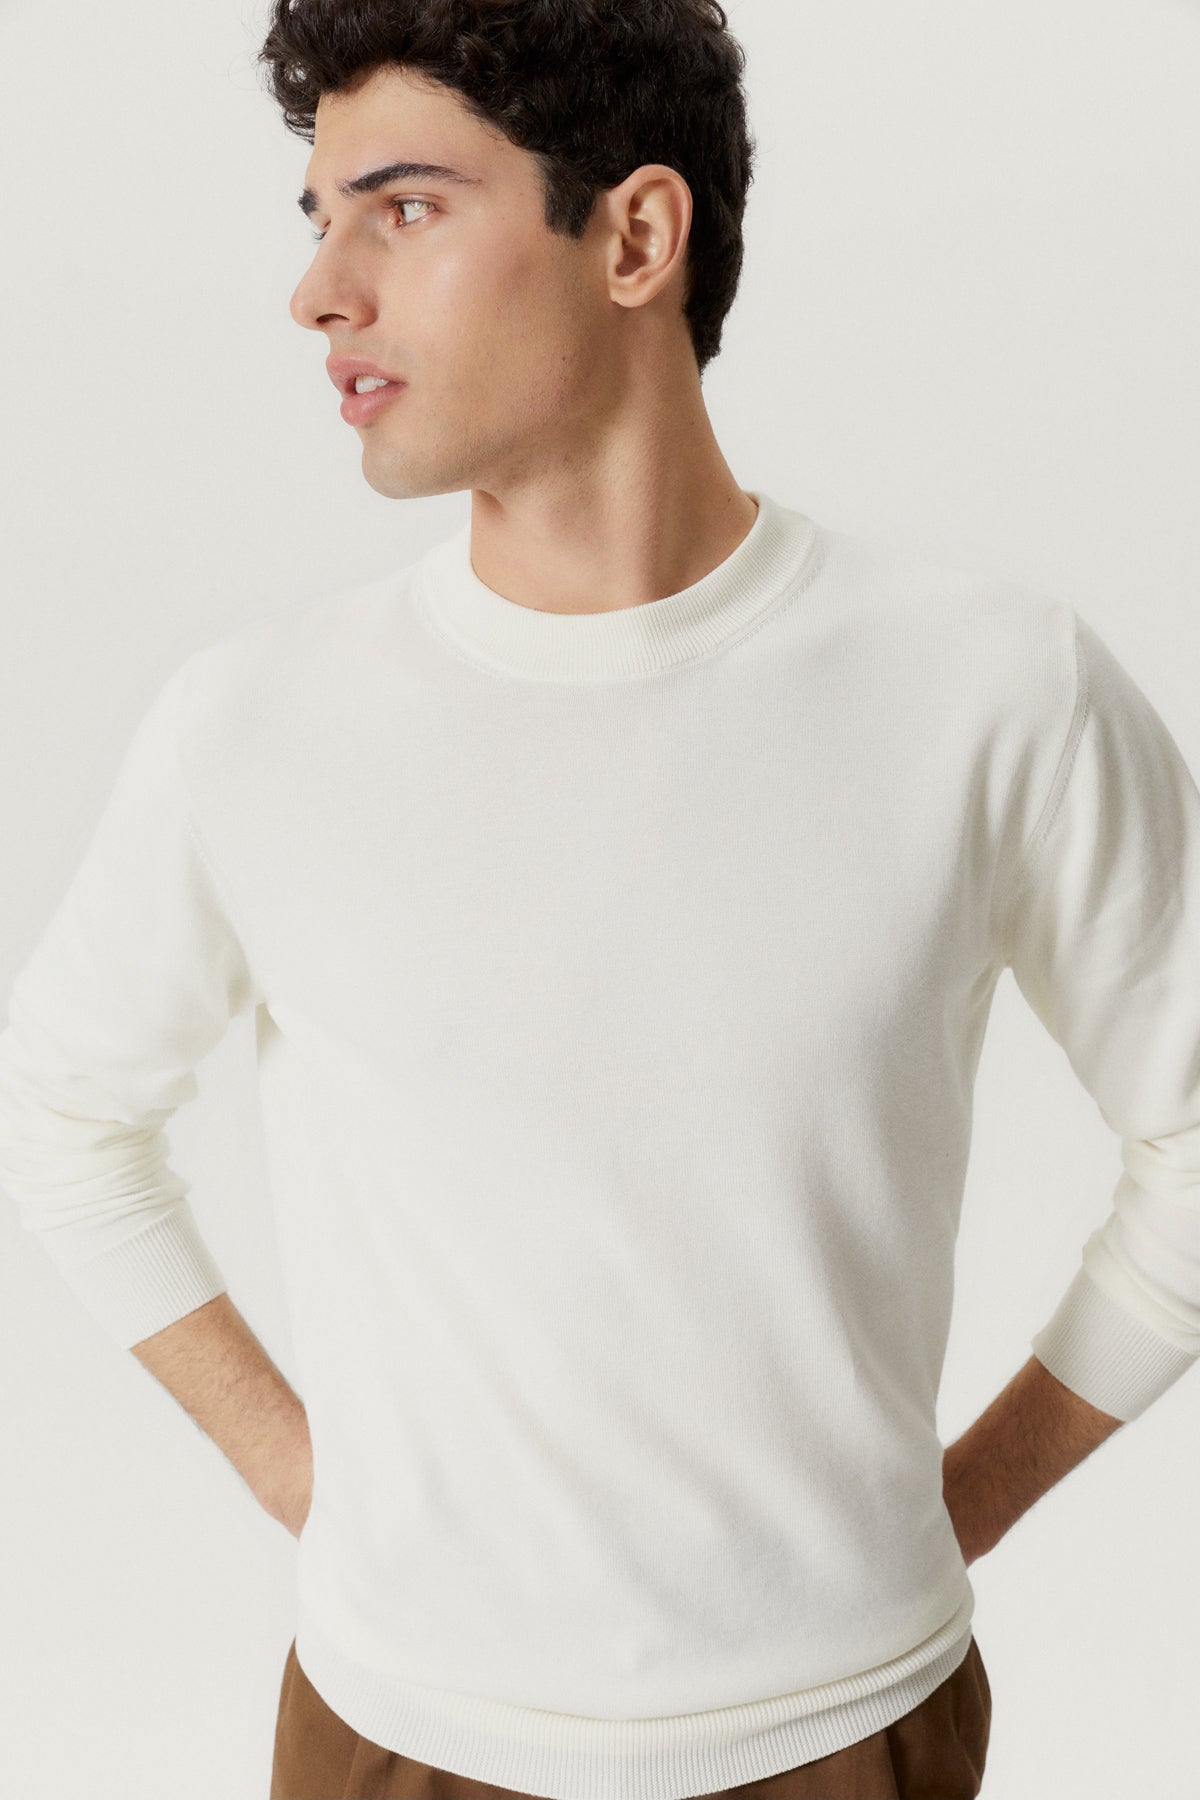 the organic cotton lightweight sweater milk white